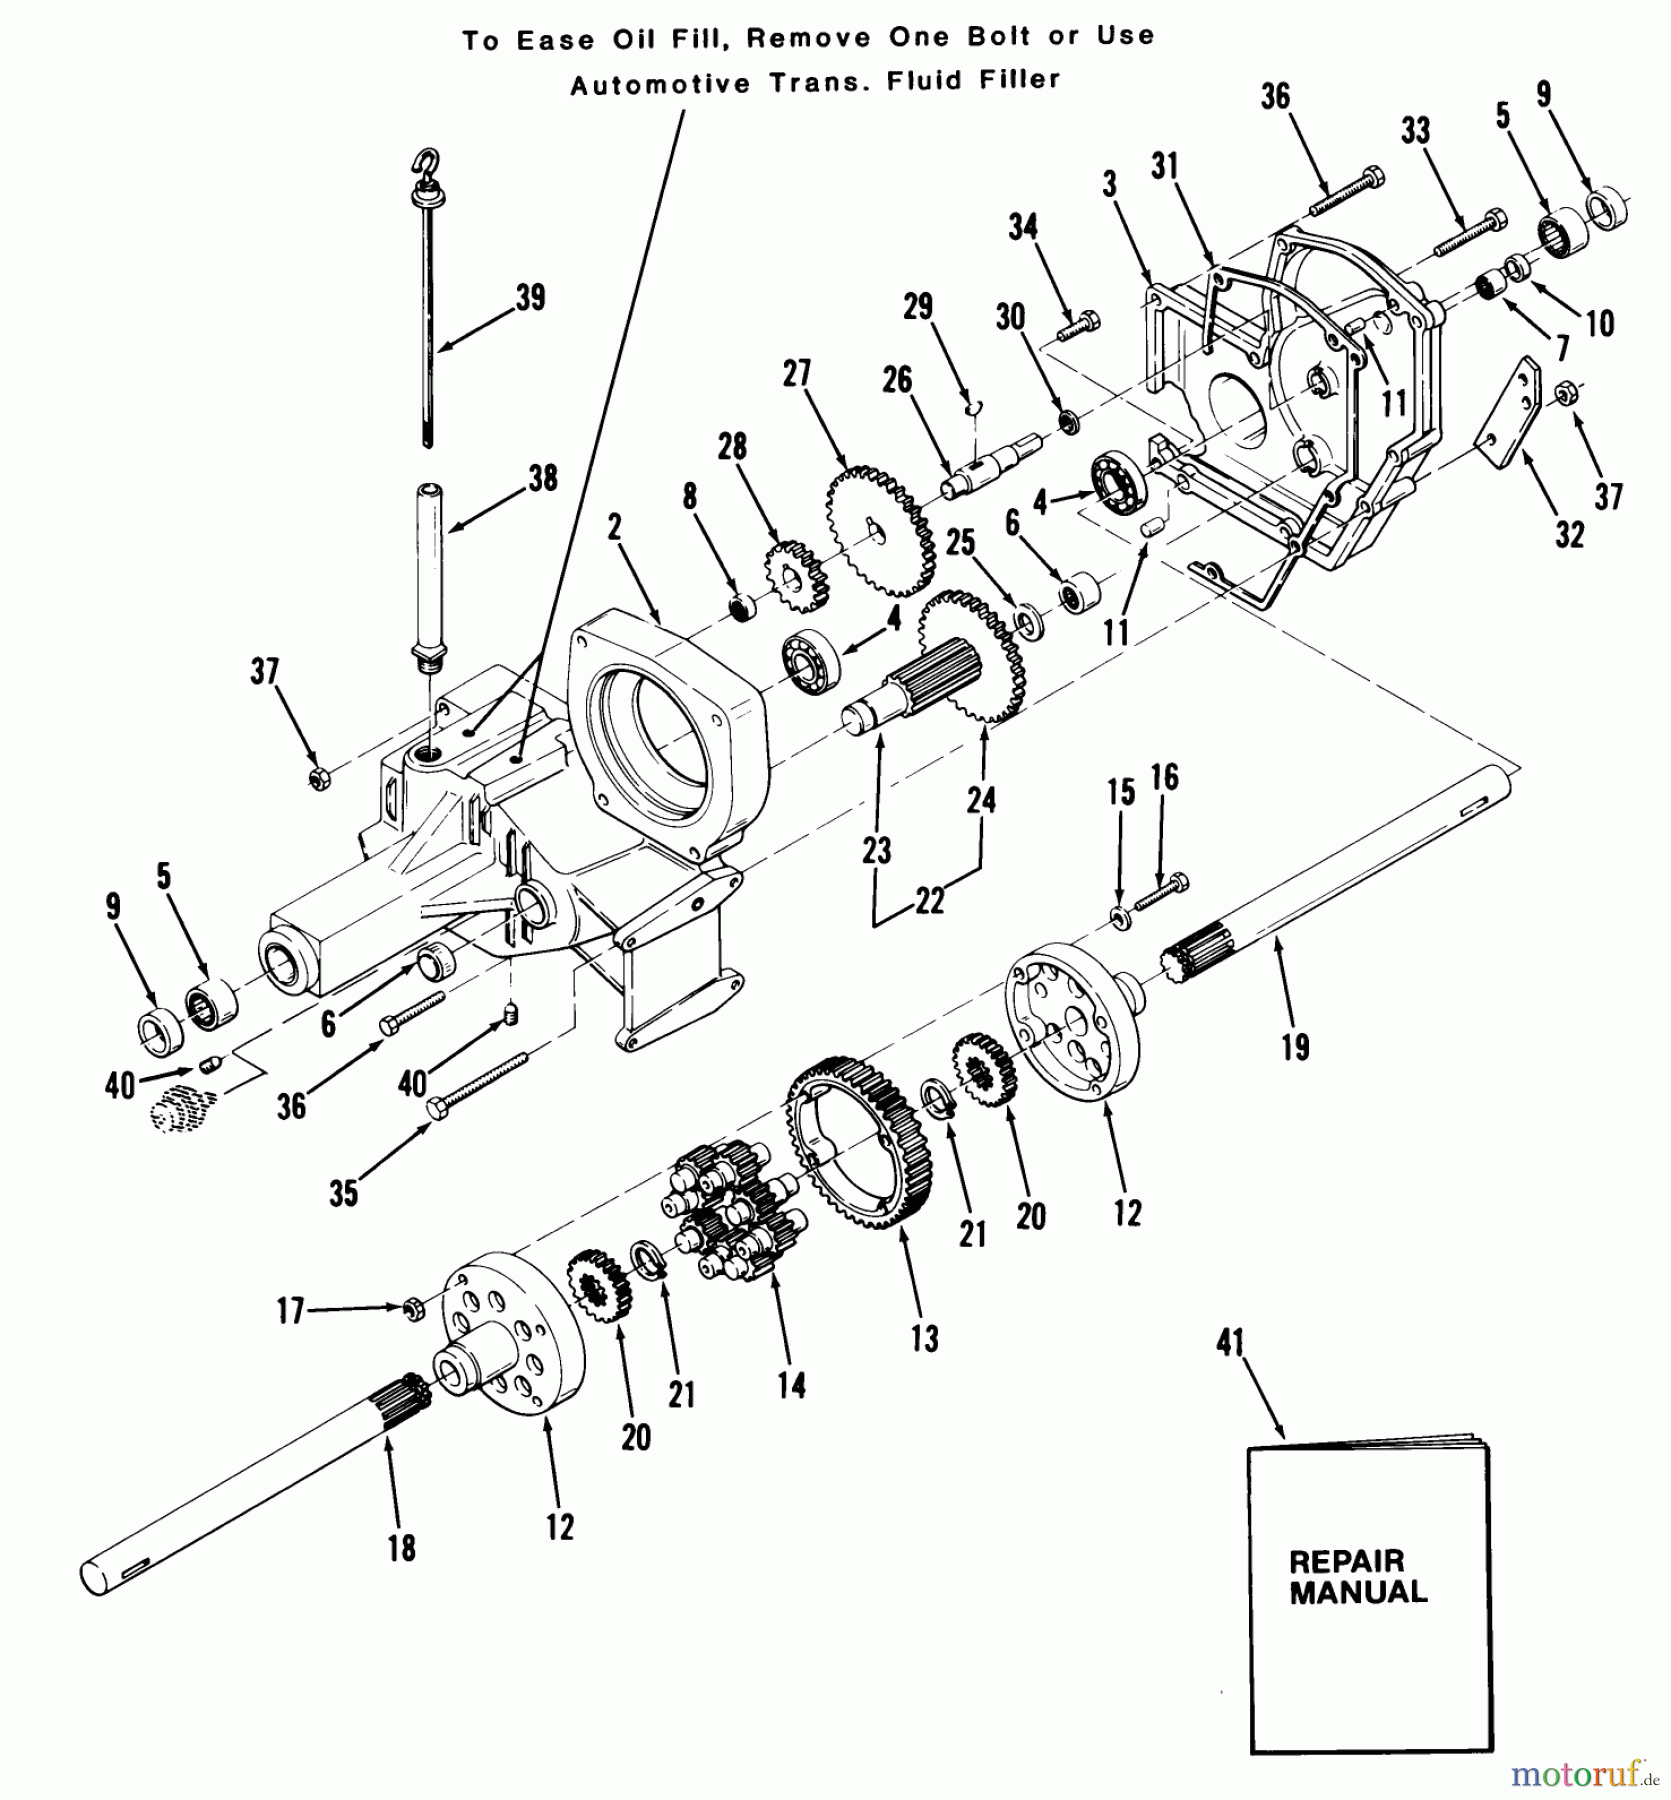  Toro Neu Mowers, Lawn & Garden Tractor Seite 1 31-16OE01 (516-H) - Toro 516-H Garden Tractor, 1988 TRANSAXLE